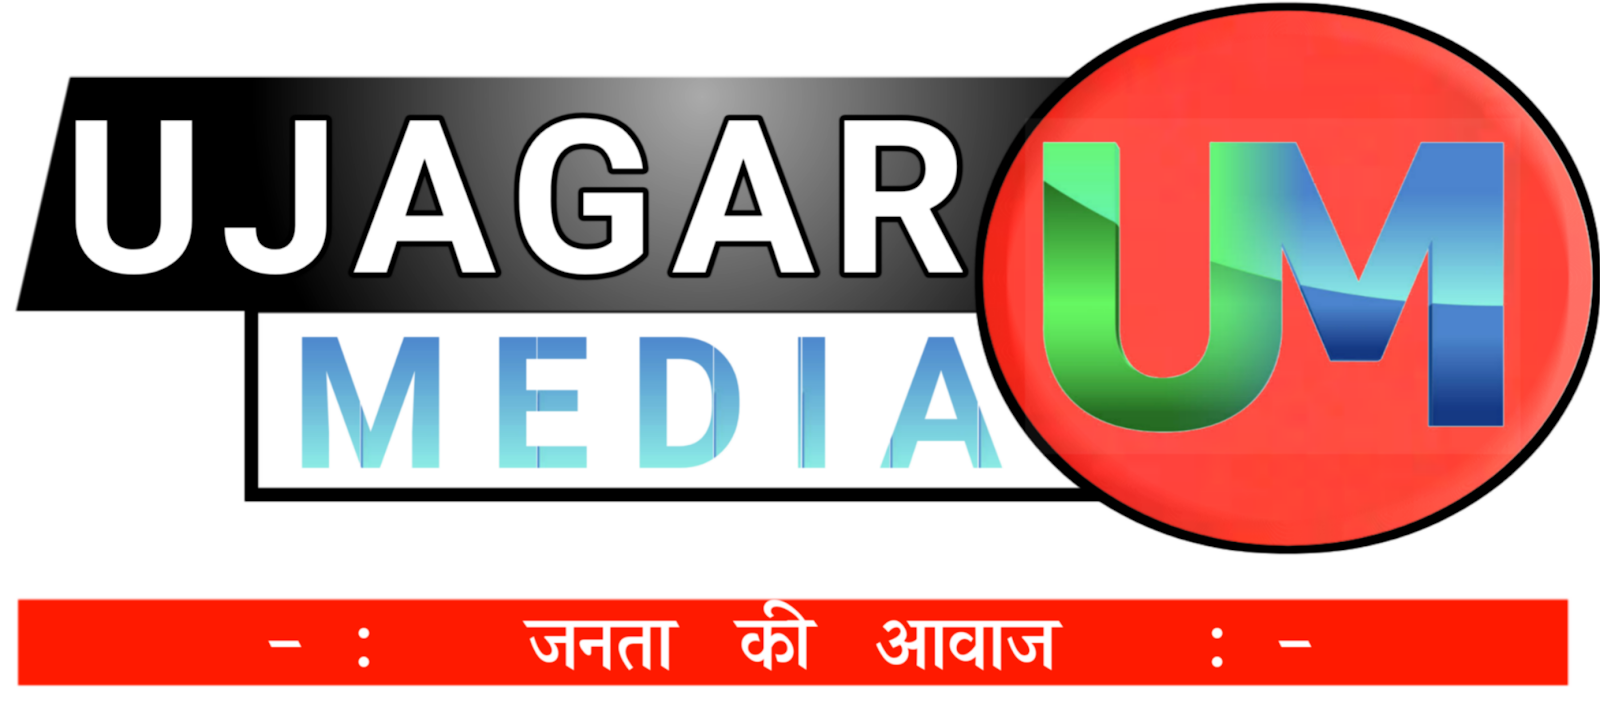 उजागर मीडिया : Ujagar Media